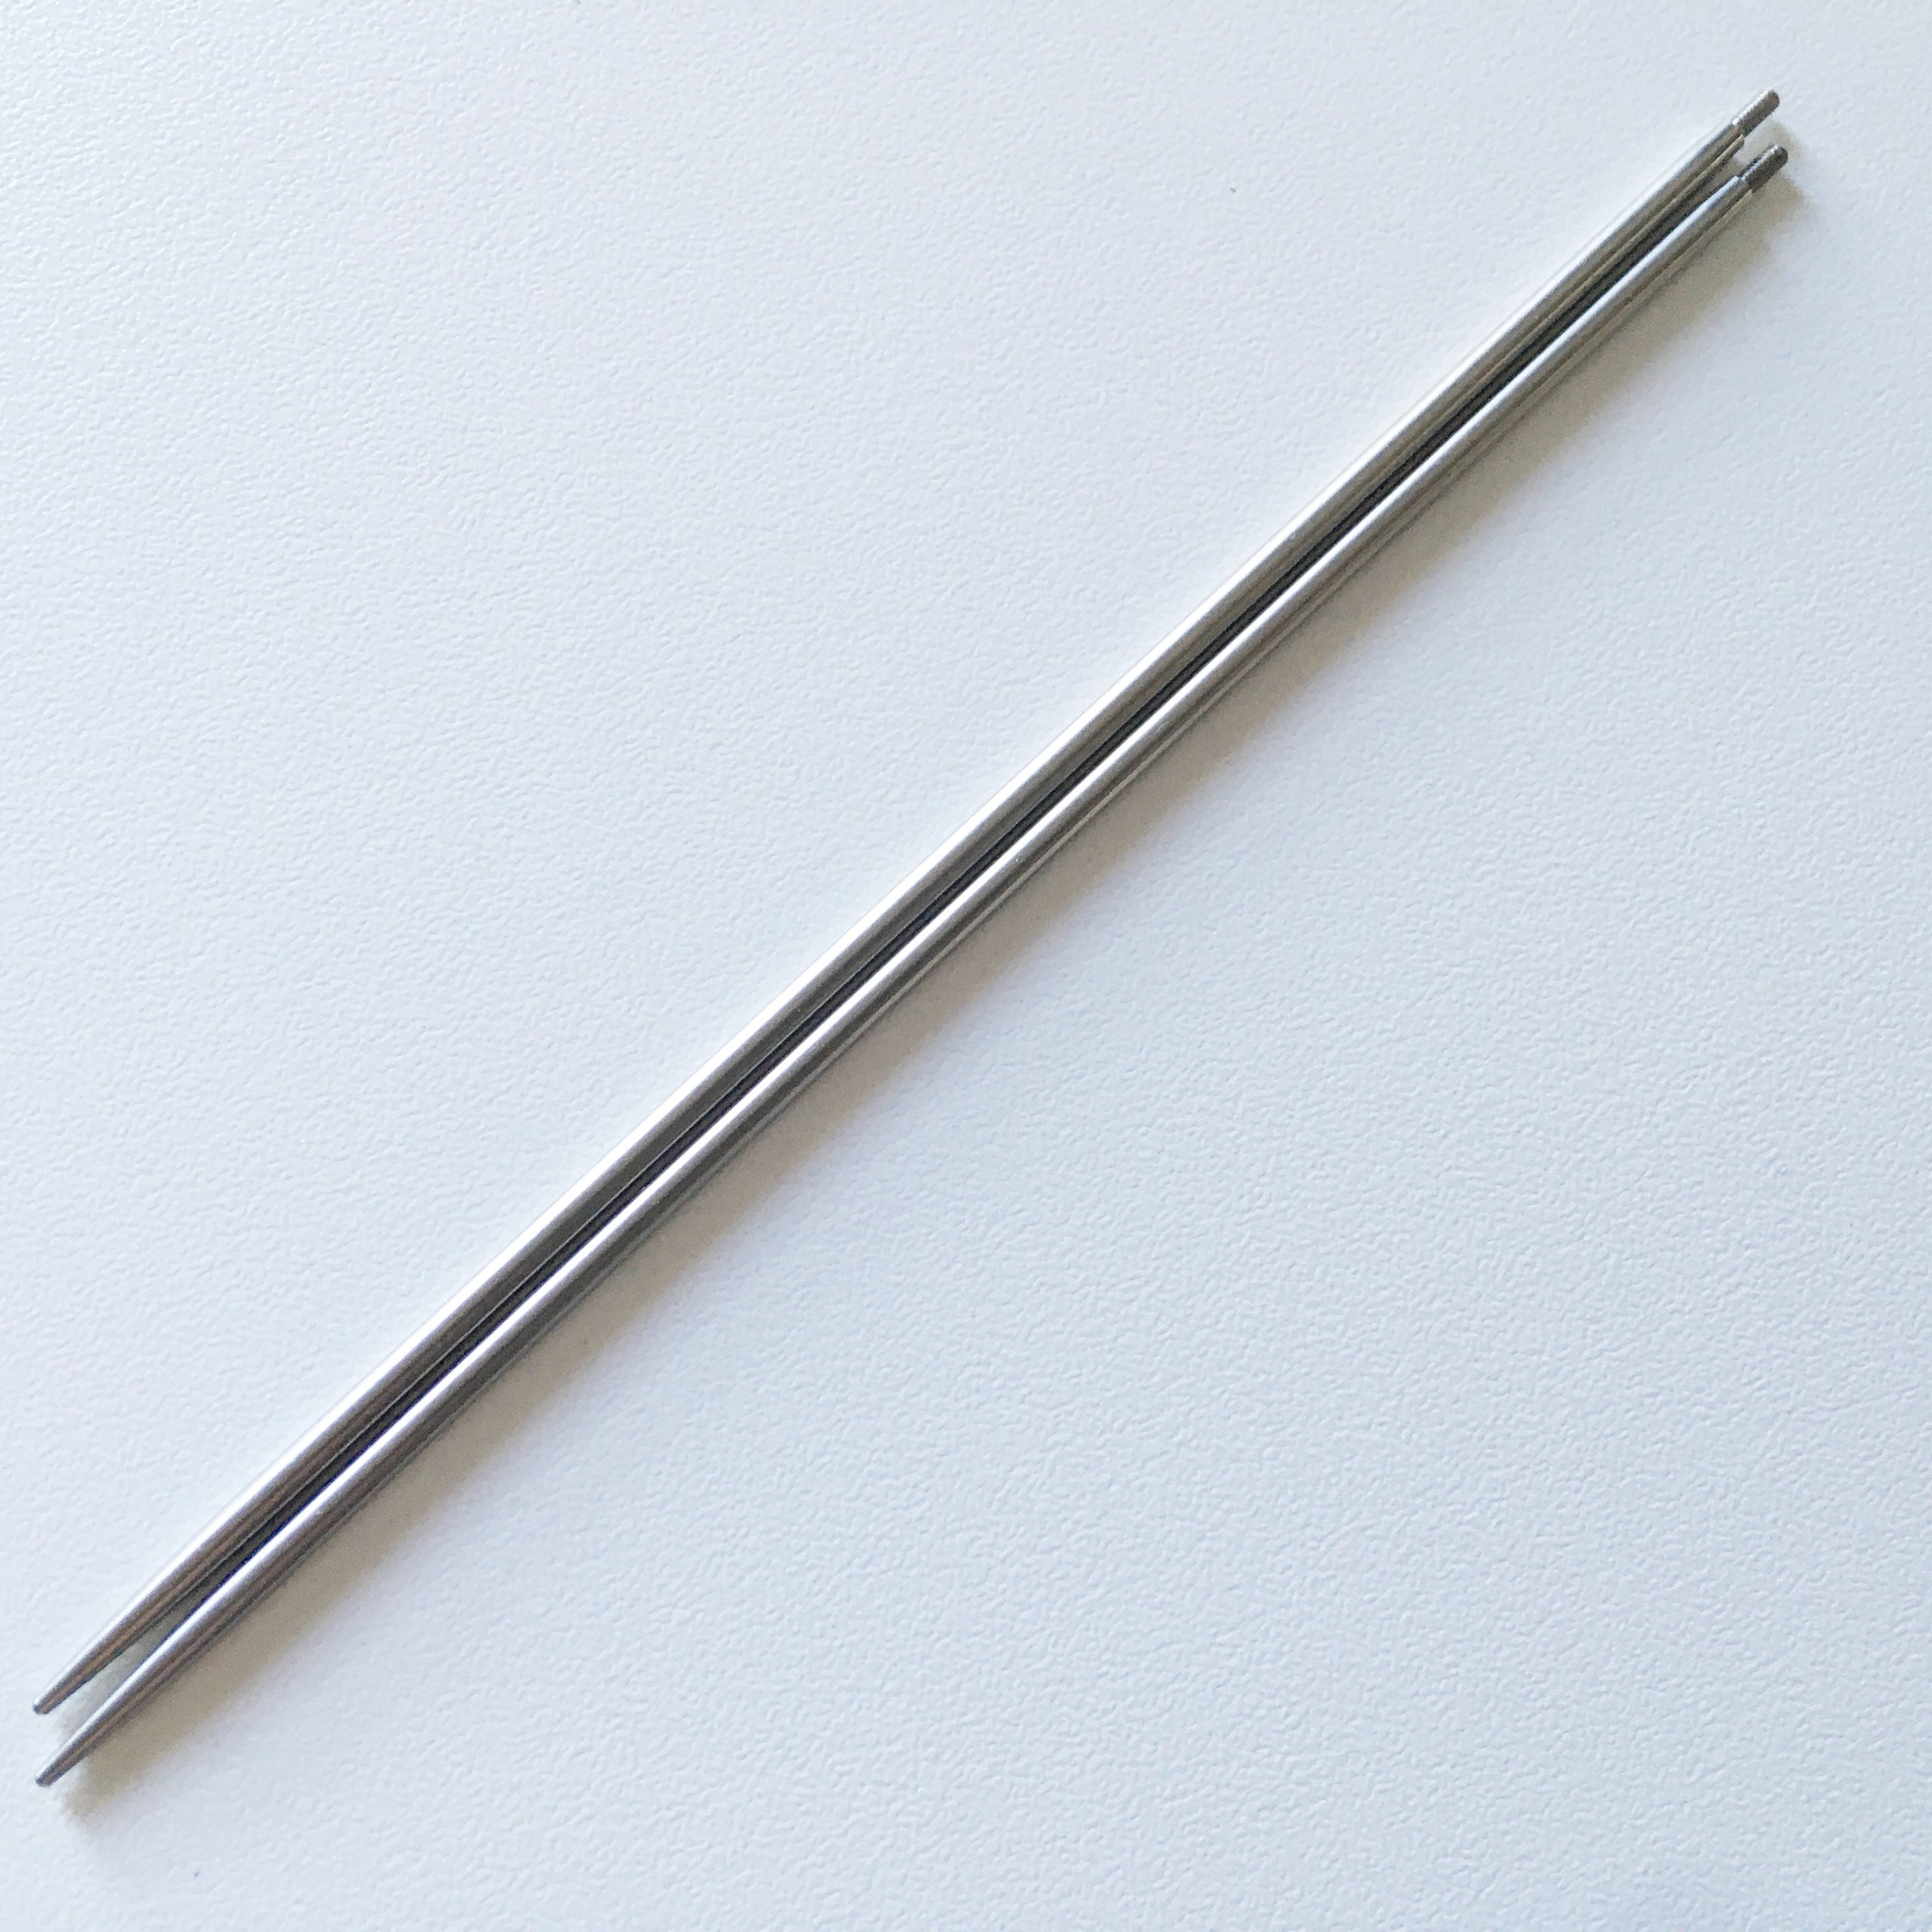 Sterile standard blunt needles 25G, 50 pieces - CELLINK